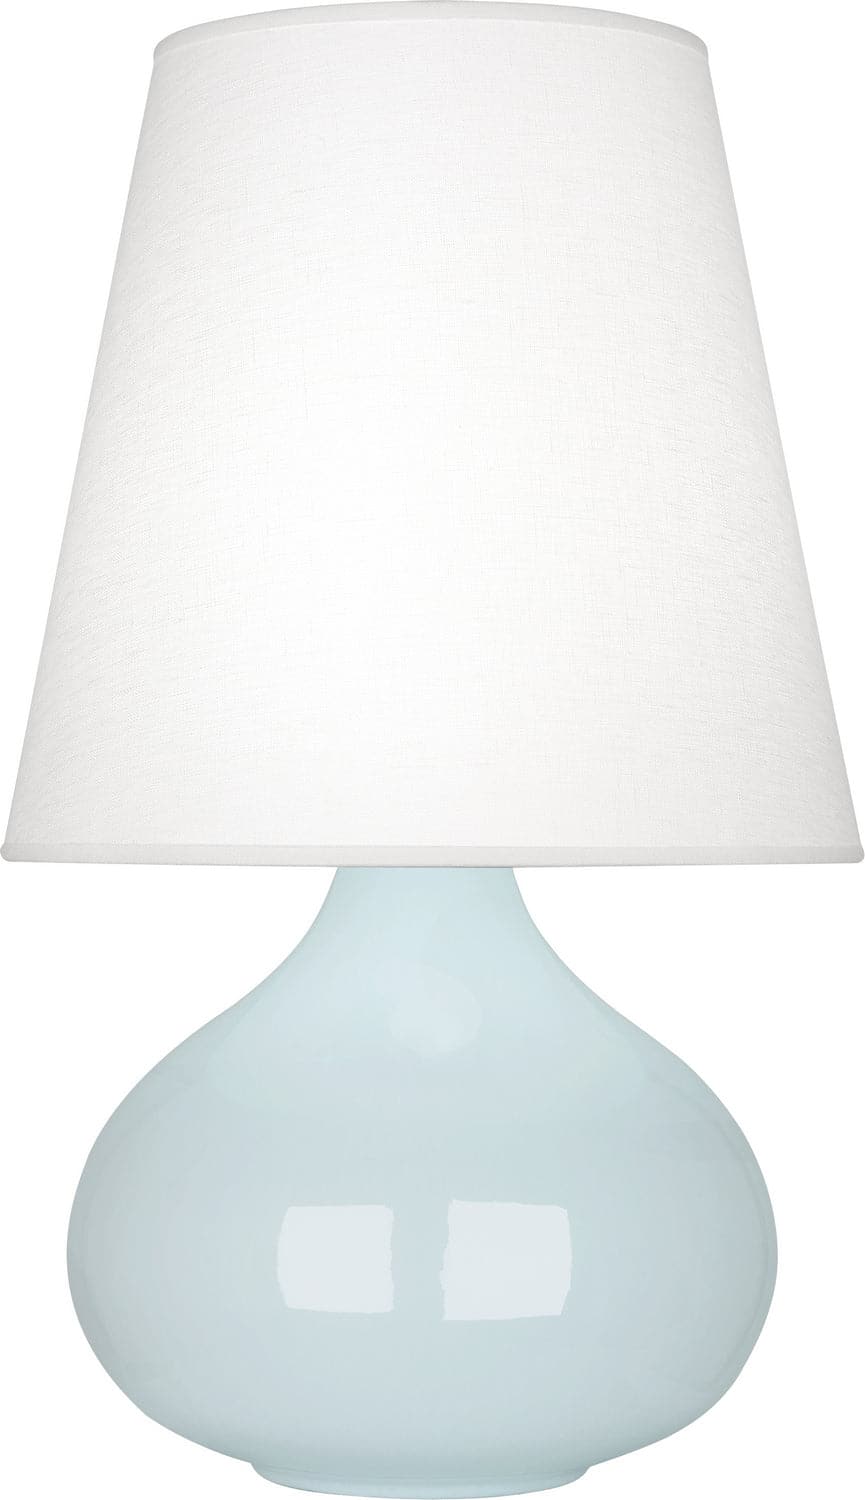 Robert Abbey - BB93 - One Light Accent Lamp - June - Baby Blue Glazed